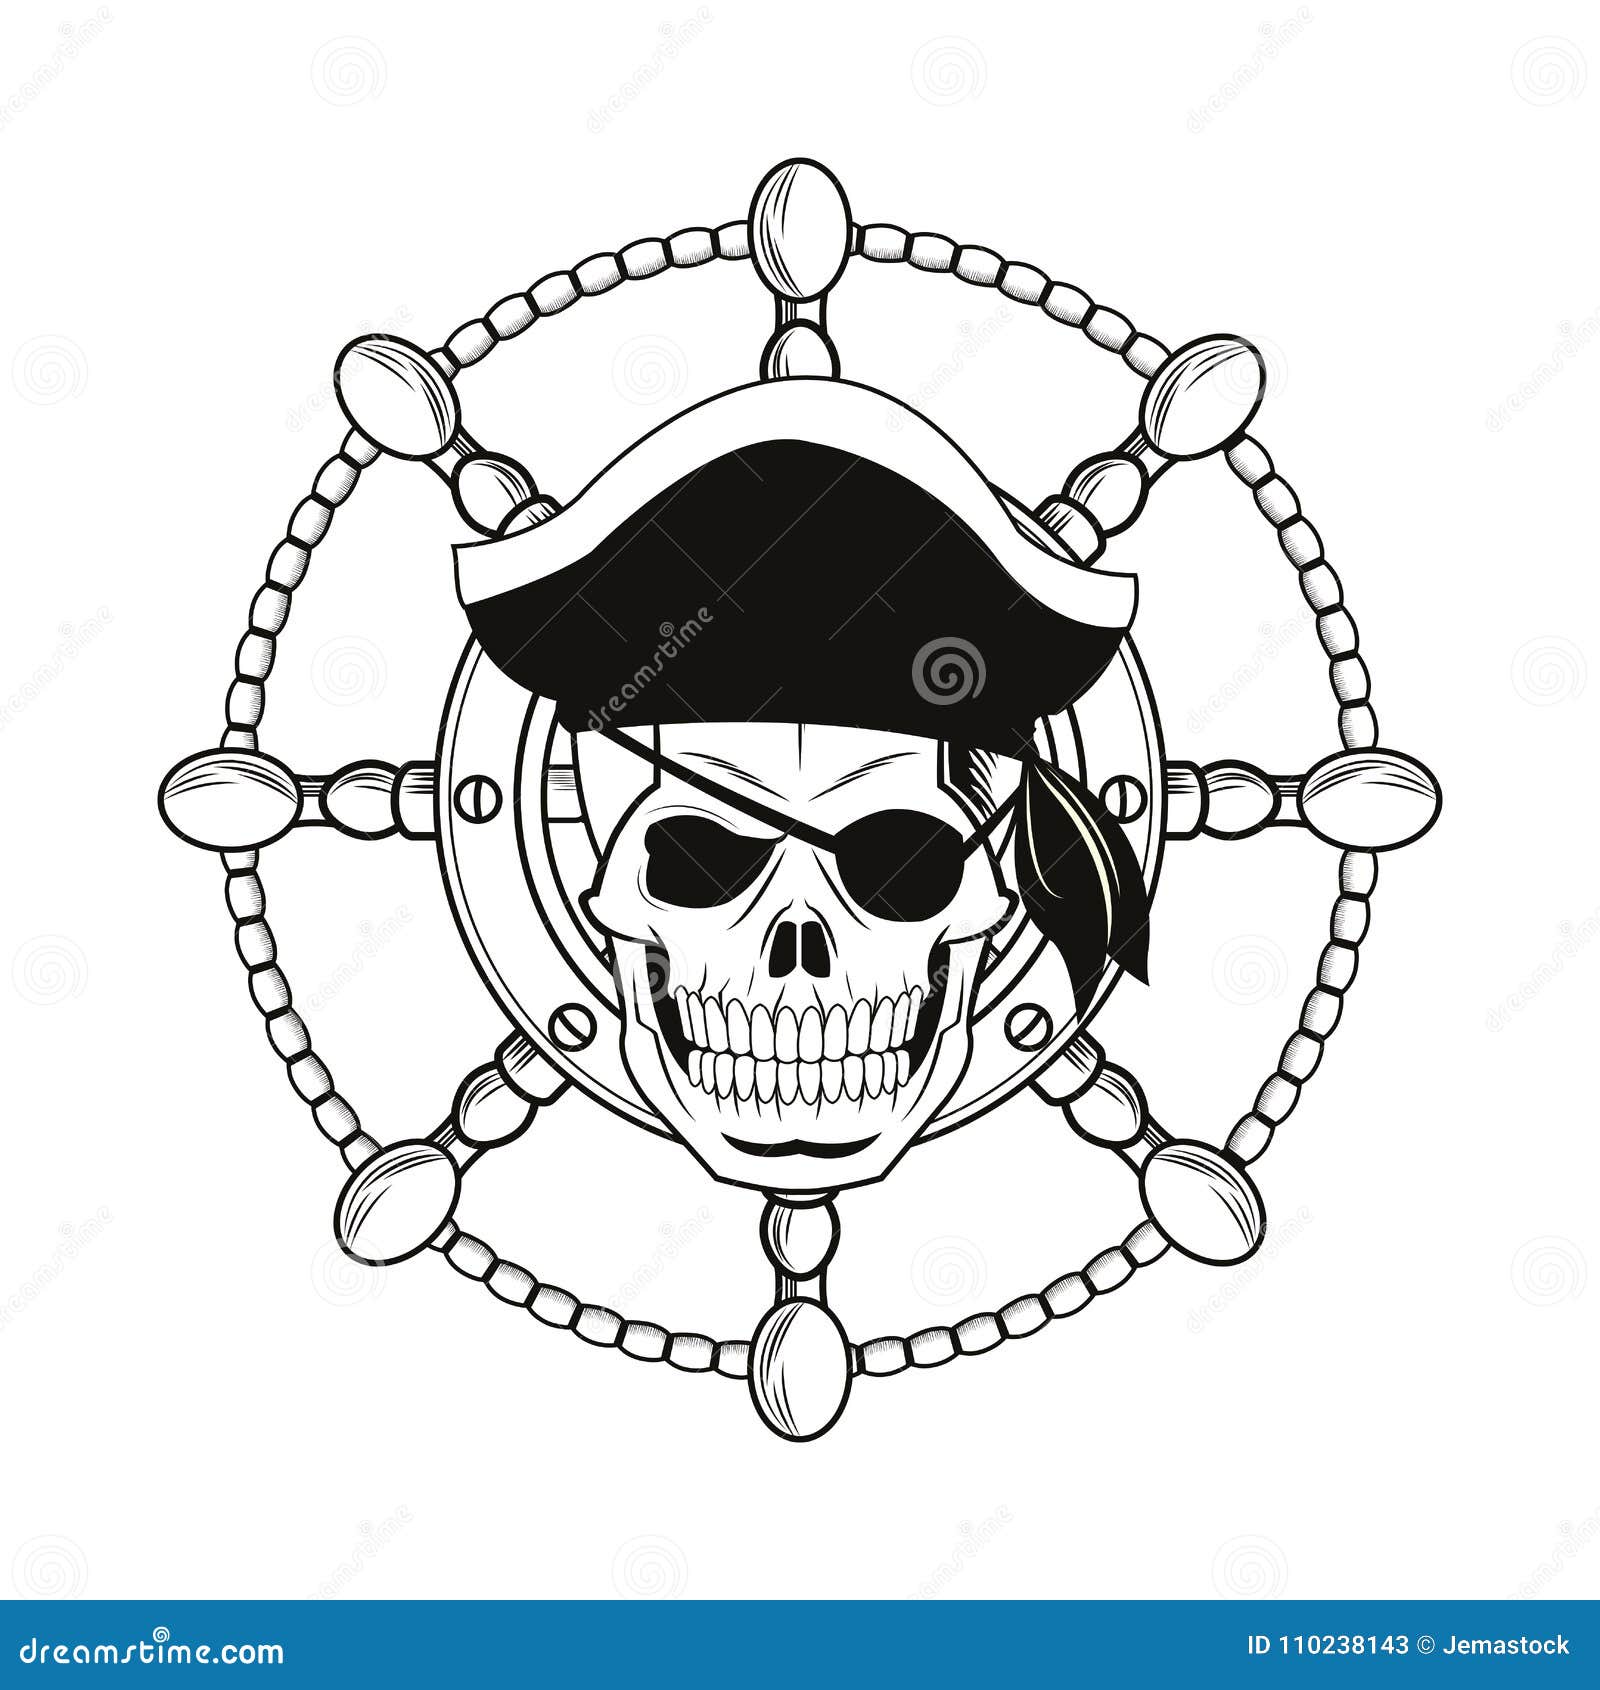 rudder tattoo | Nautical tattoo, Ship wheel tattoo, Triangle tattoos